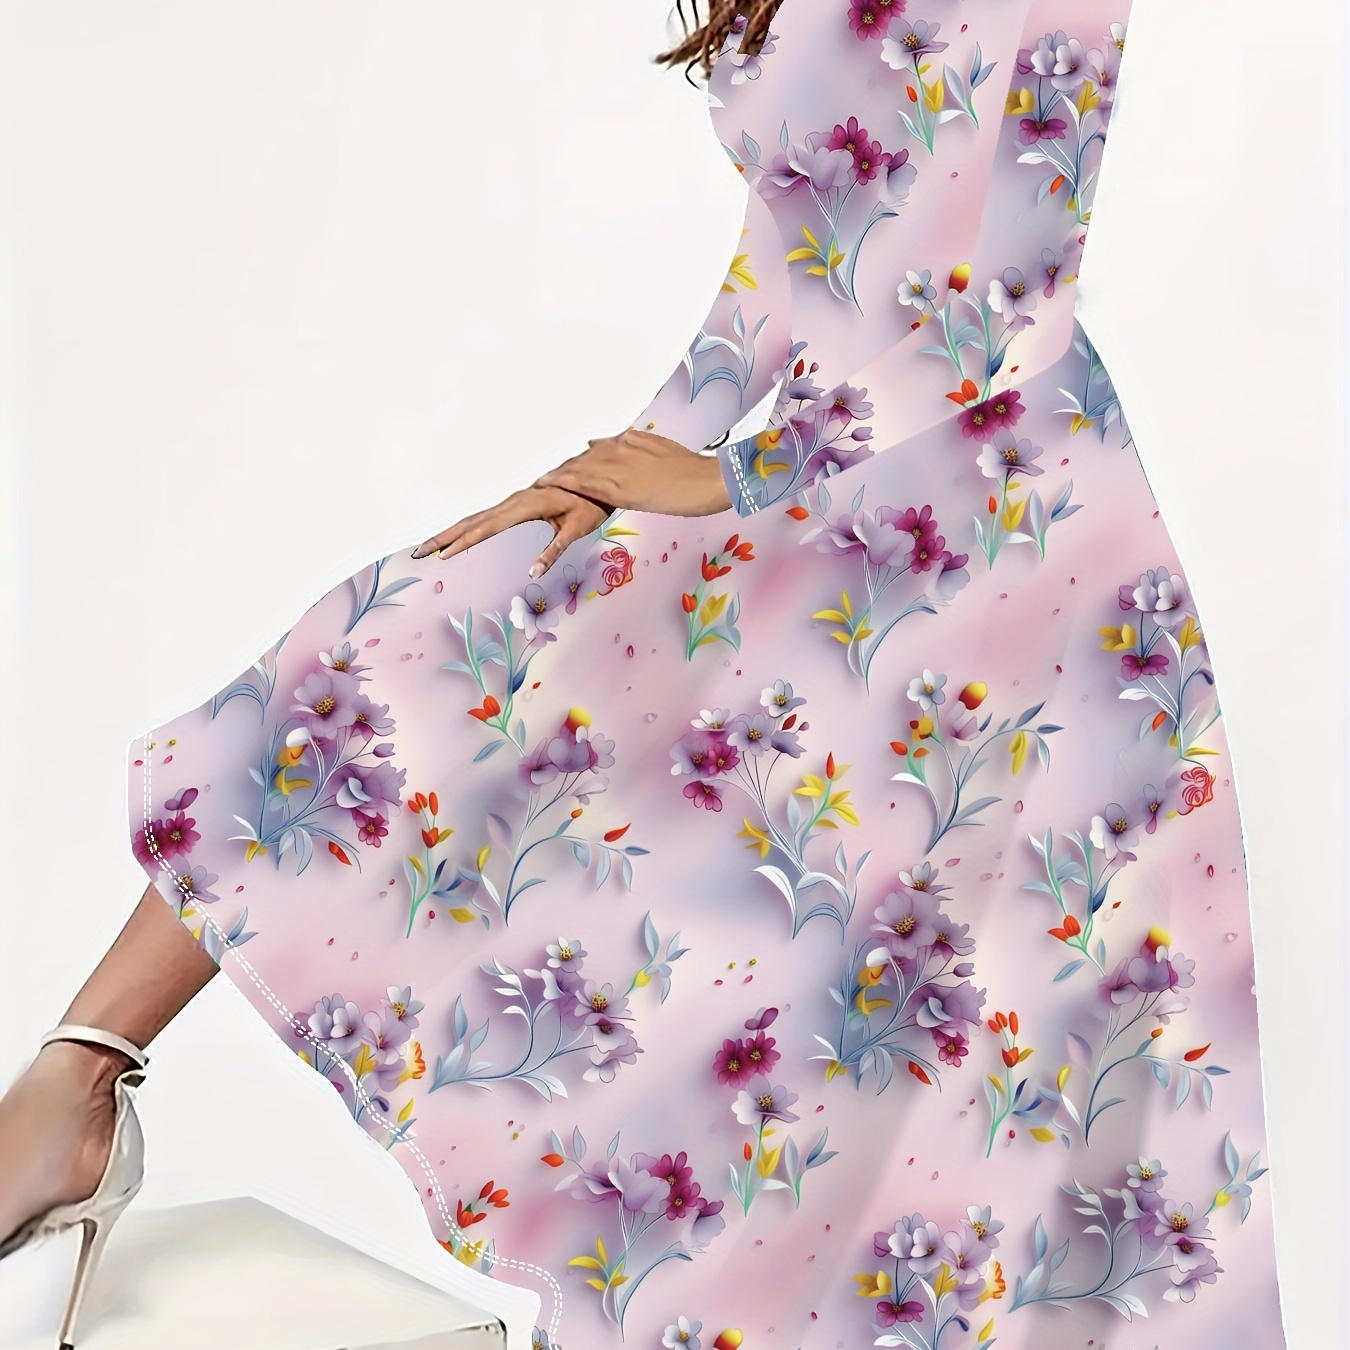 

Plus Size Floral Print Longline Dress, Elegant Long Sleeve Crew Neck Dress For Spring & Fall, Women's Plus Size Clothing